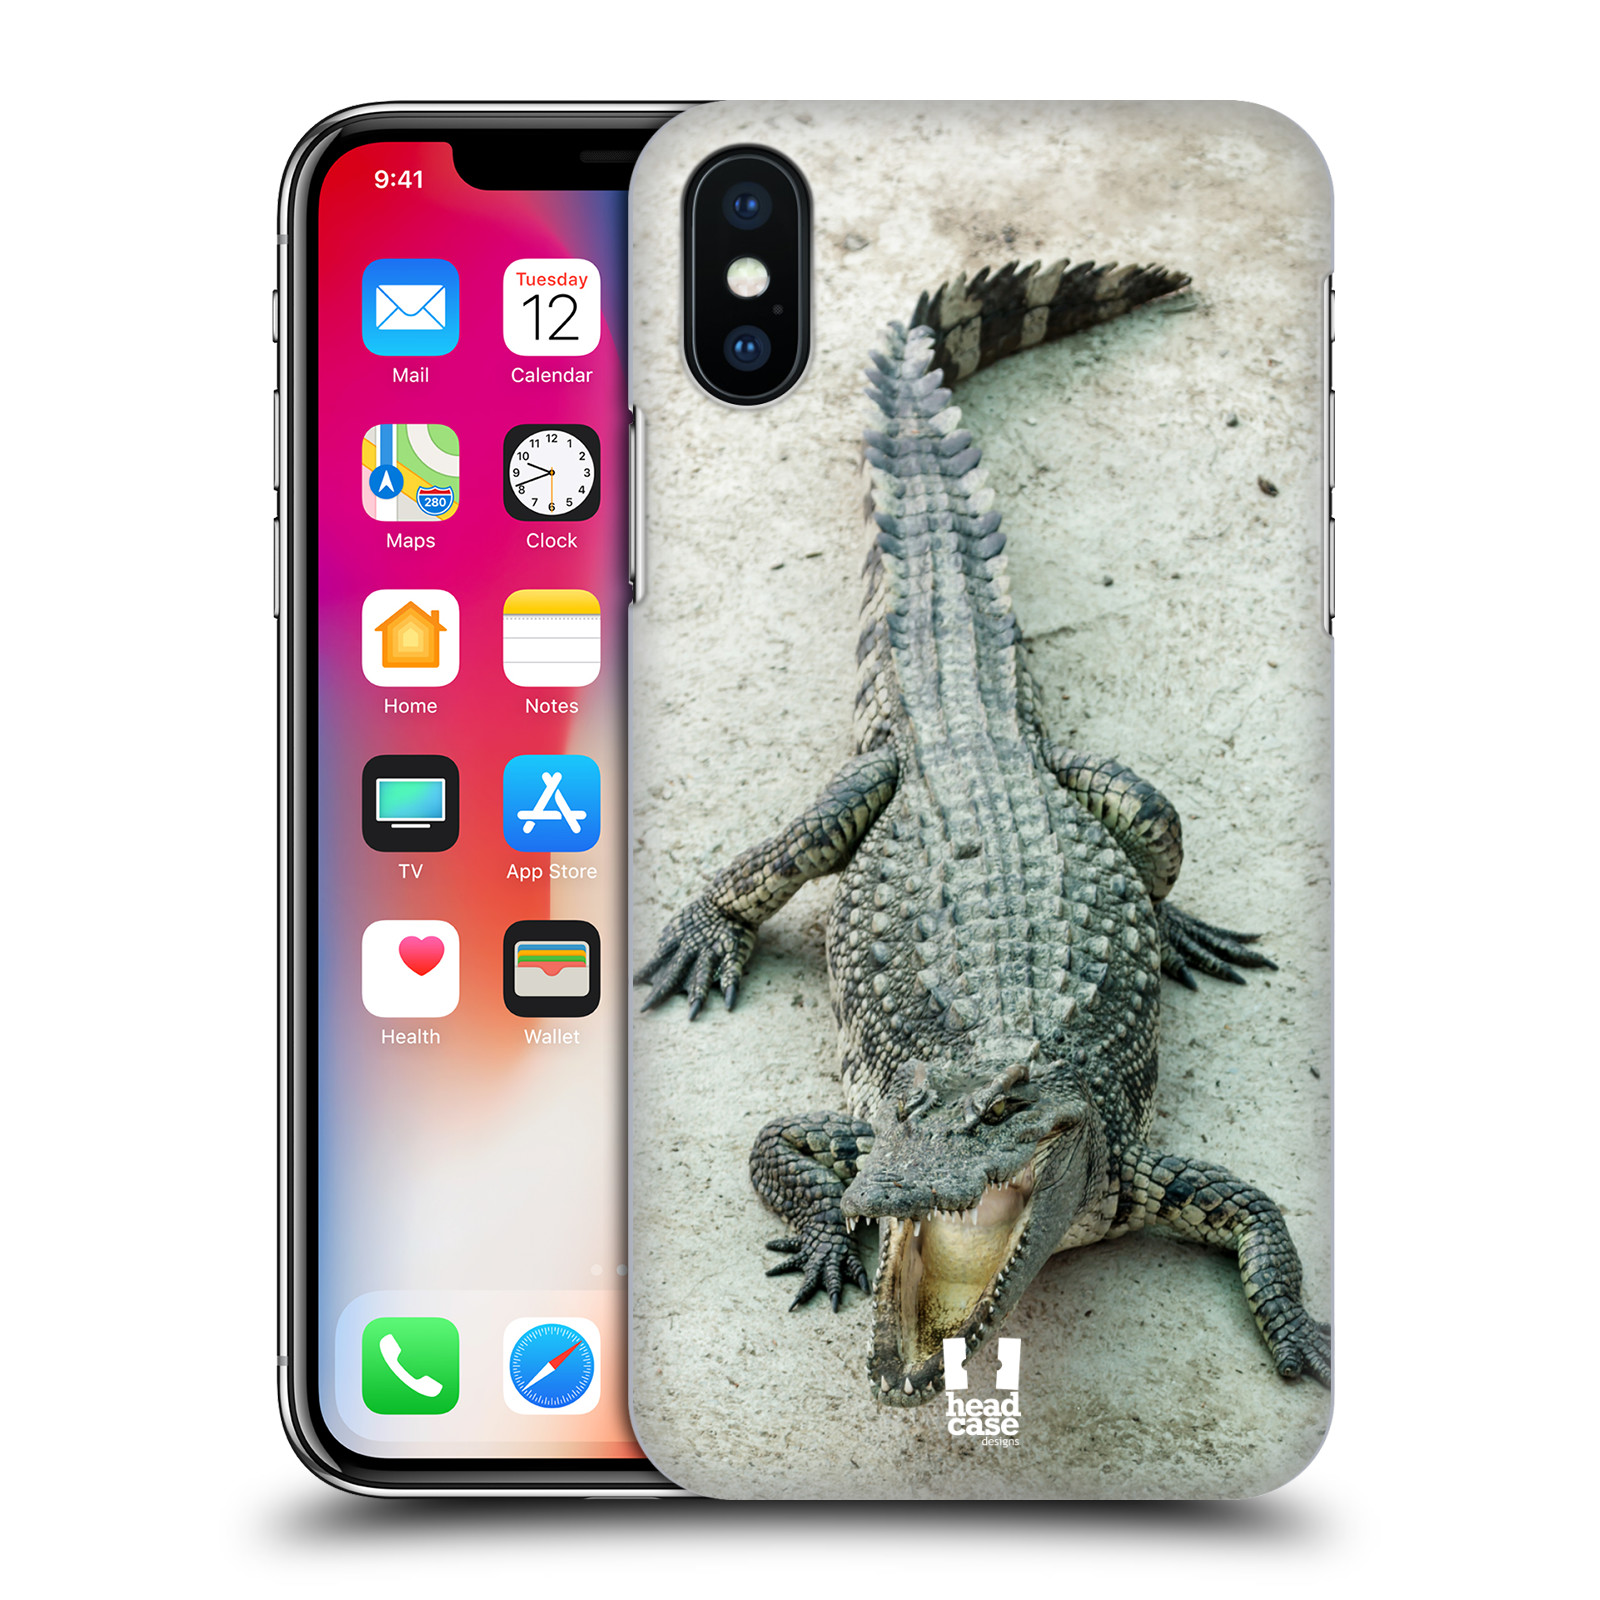 HEAD CASE plastový obal na mobil Apple Iphone X / XS vzor Divočina, Divoký život a zvířata foto KROKODÝL, KAJMAN